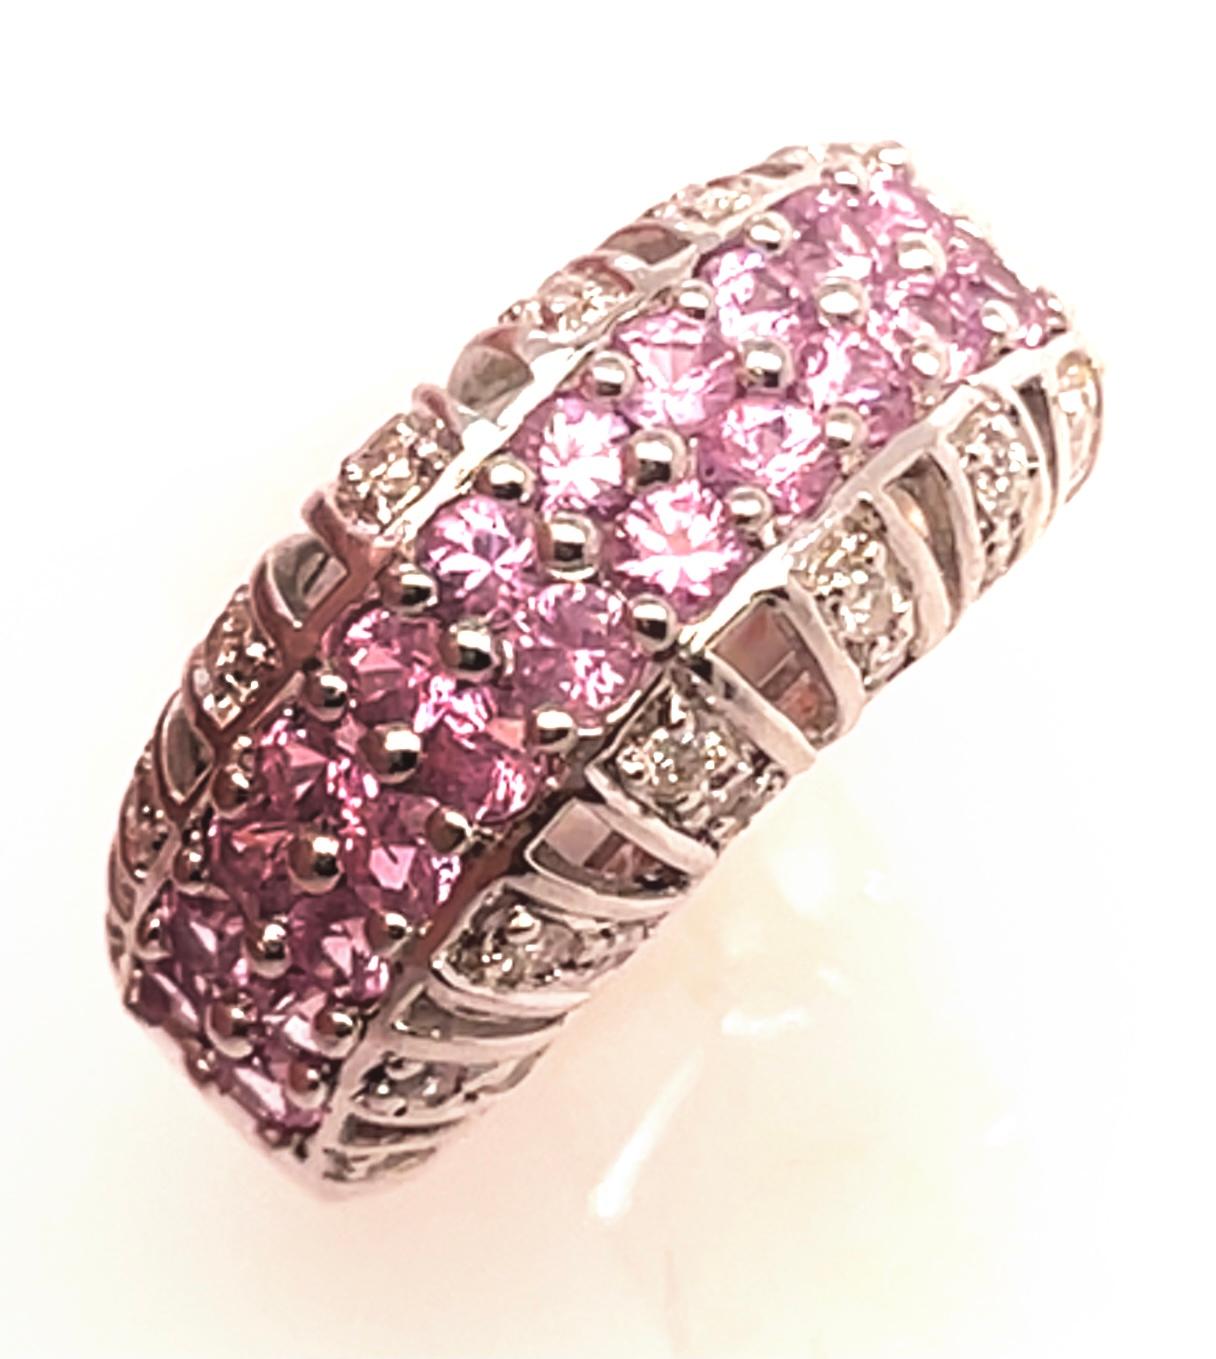 14 Karat White Gold Dome Ring With Pink Sapphires And Diamonds.
26 round diamonds 1.00 total diamond weight.
24 round pink sapphire
Size 6.5
7.39 gram total weight.